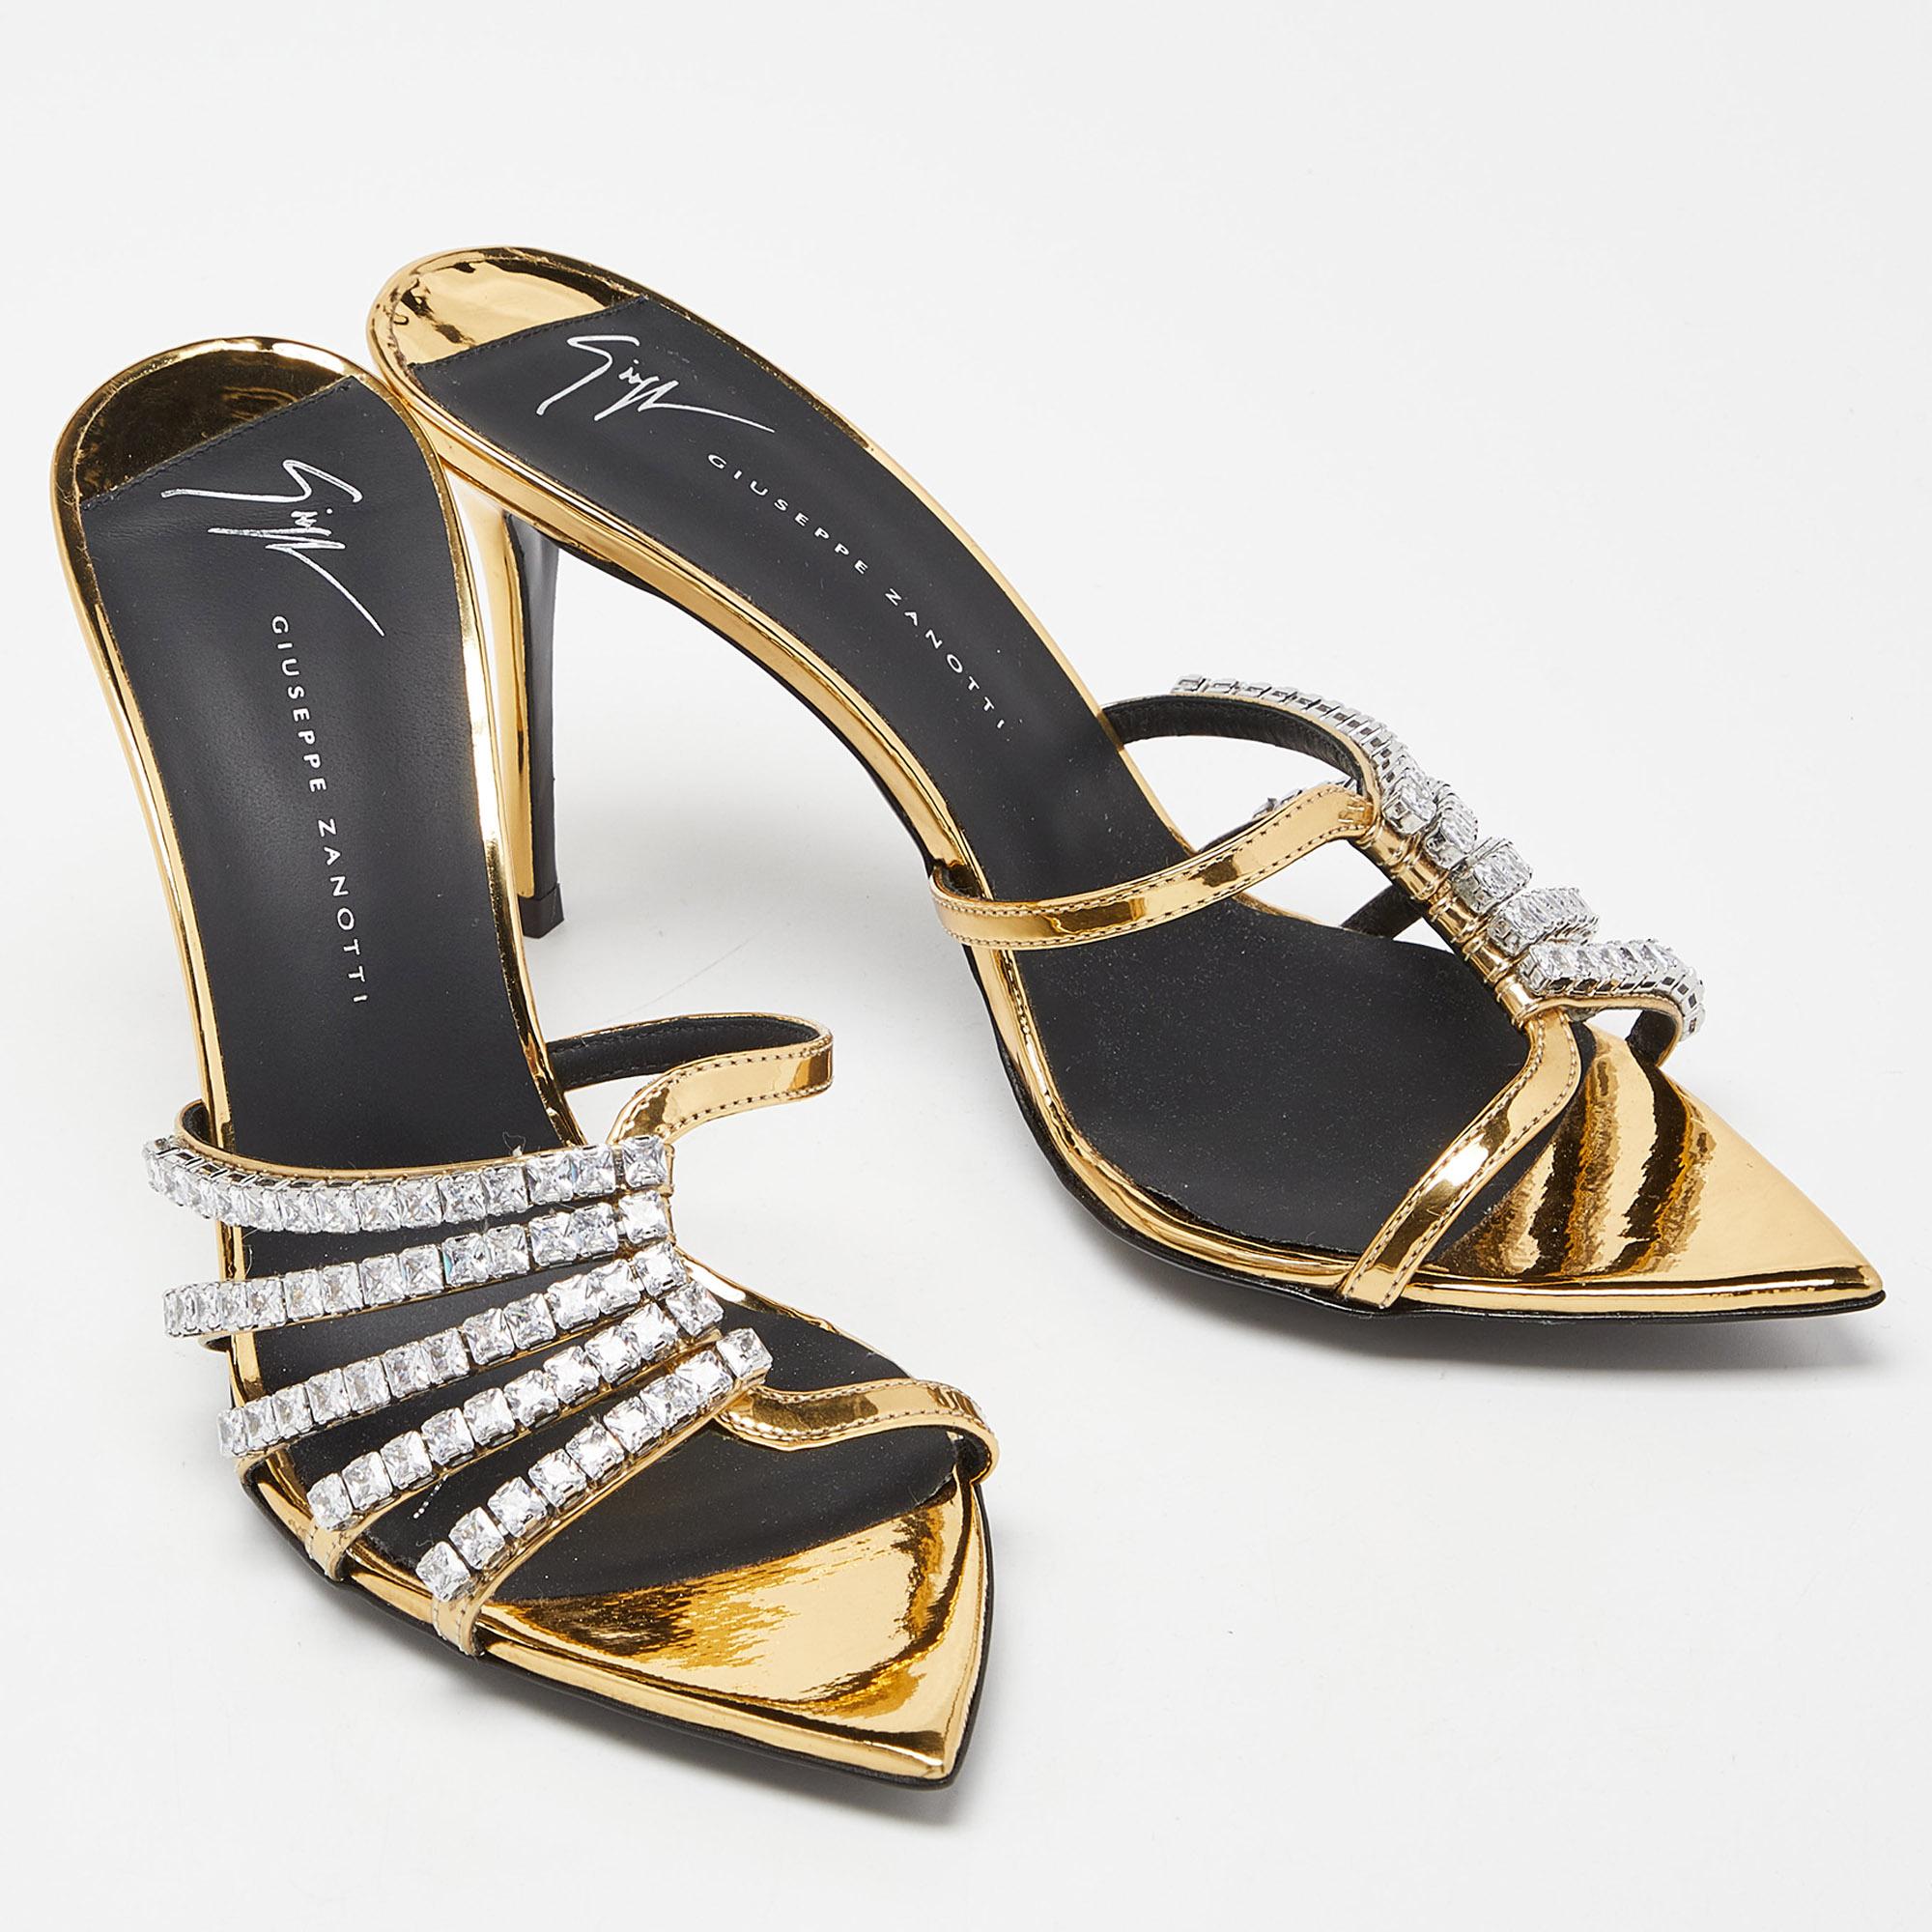 Giuseppe Zanotti Laminated Leather Crystal Embellished Slide Sandals Size 37 For Sale 1